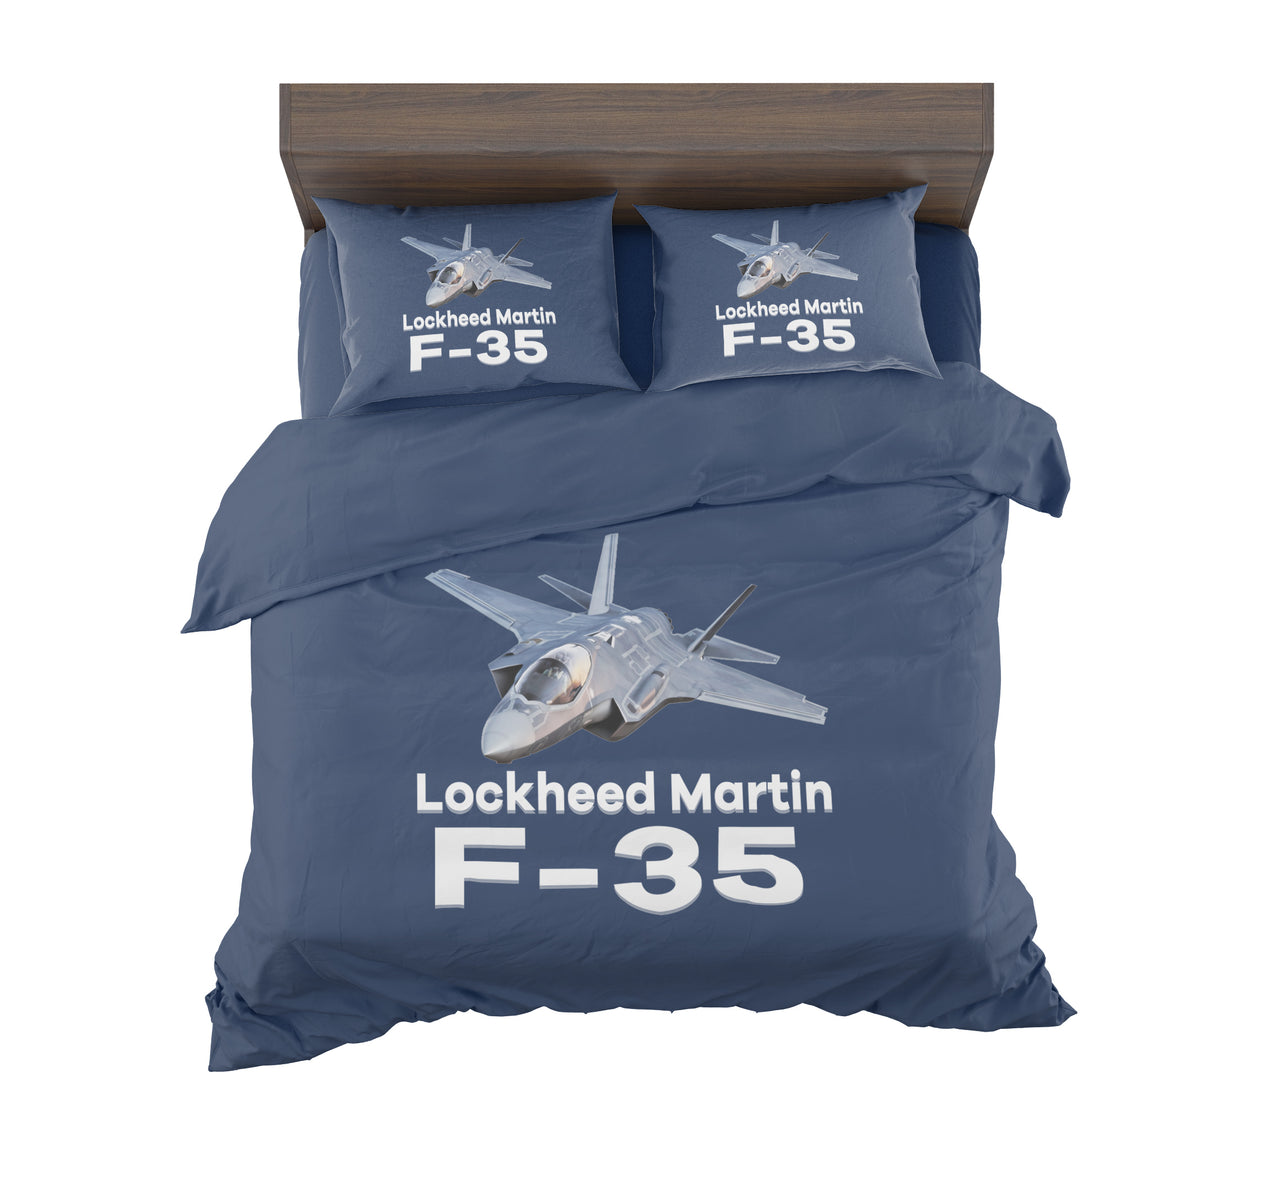 The Lockheed Martin F35 Designed Bedding Sets